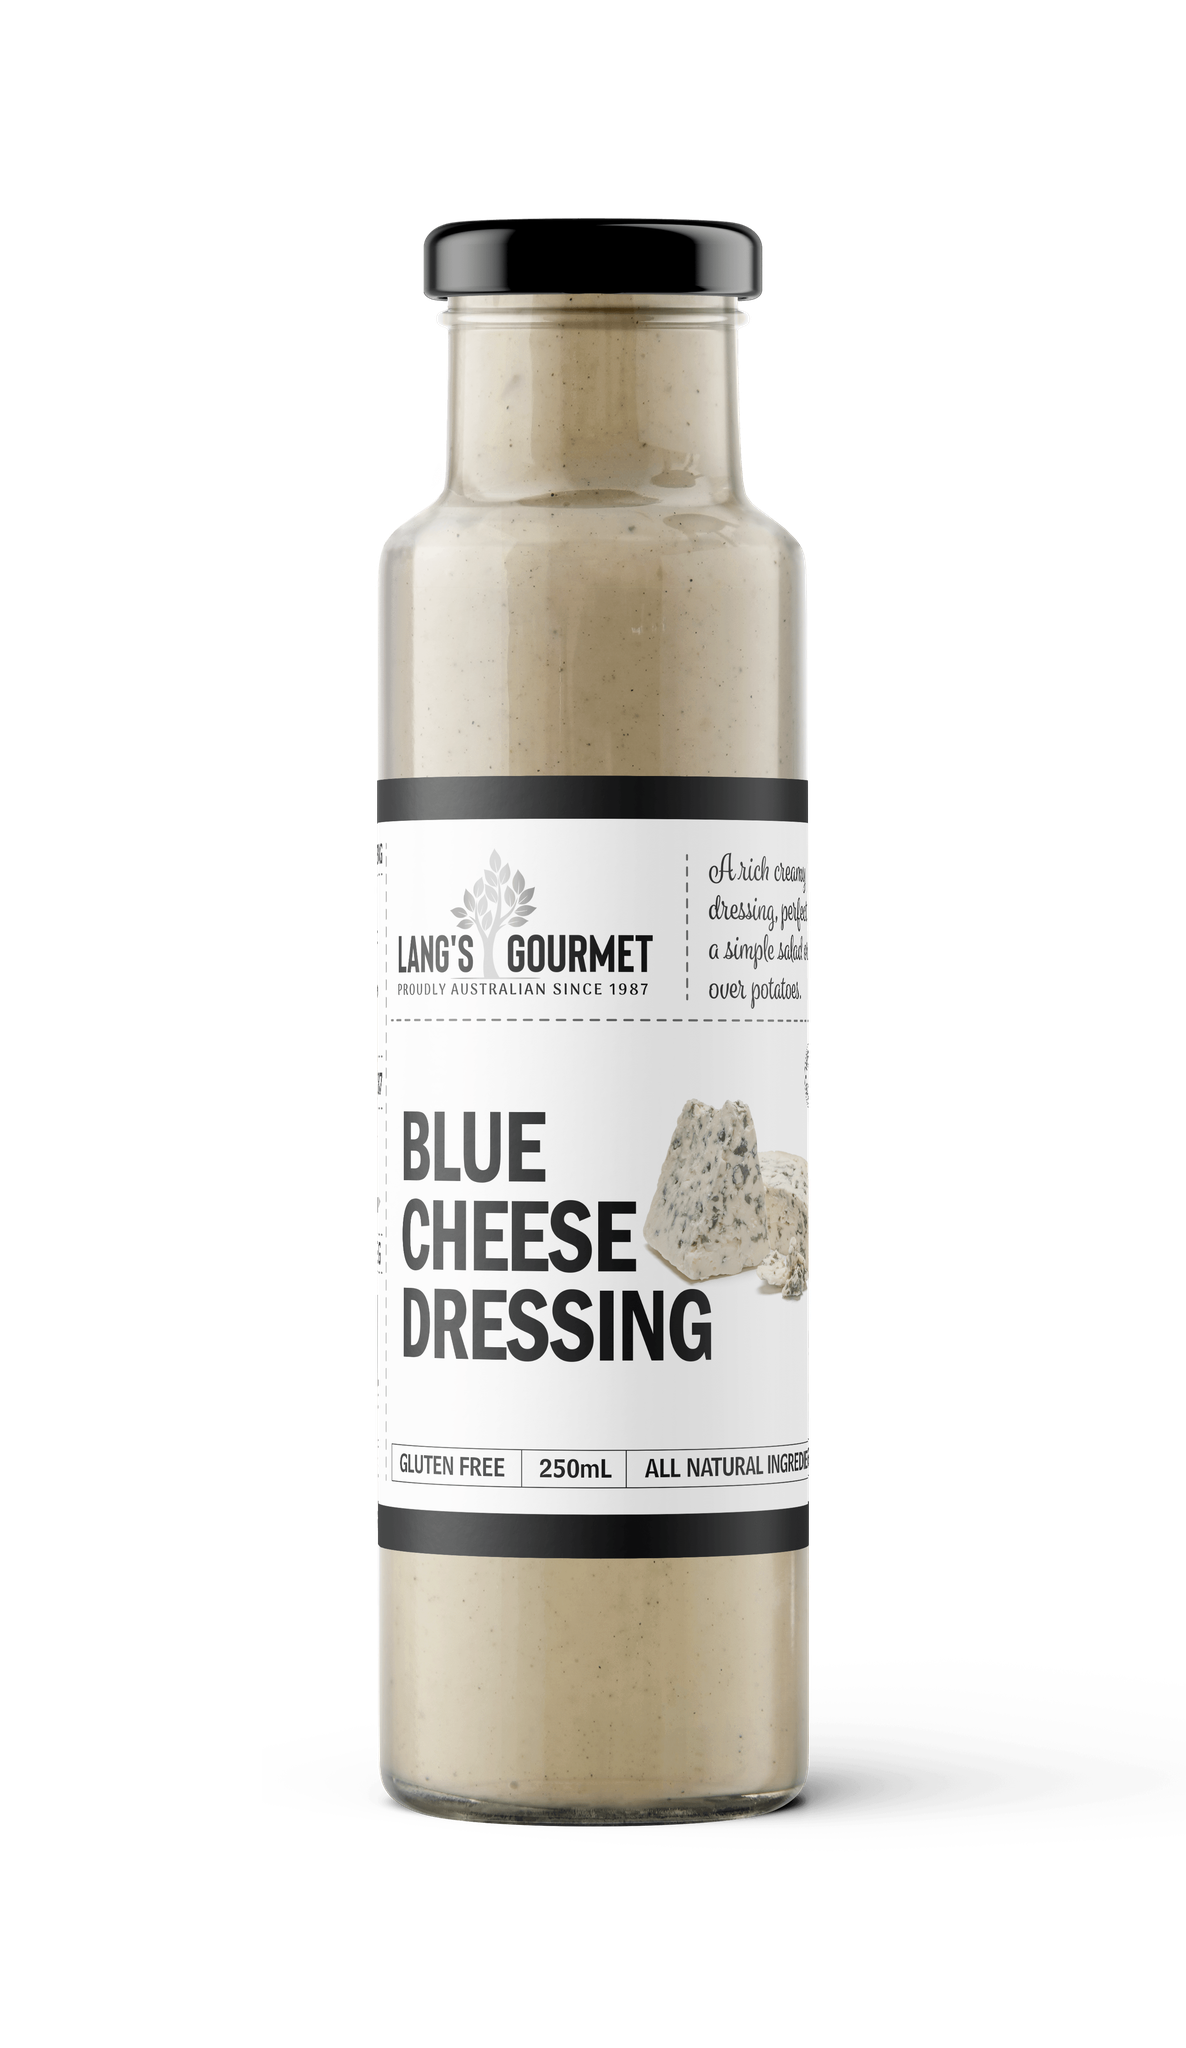 Lang's Gourmet Blue Cheese Dressing